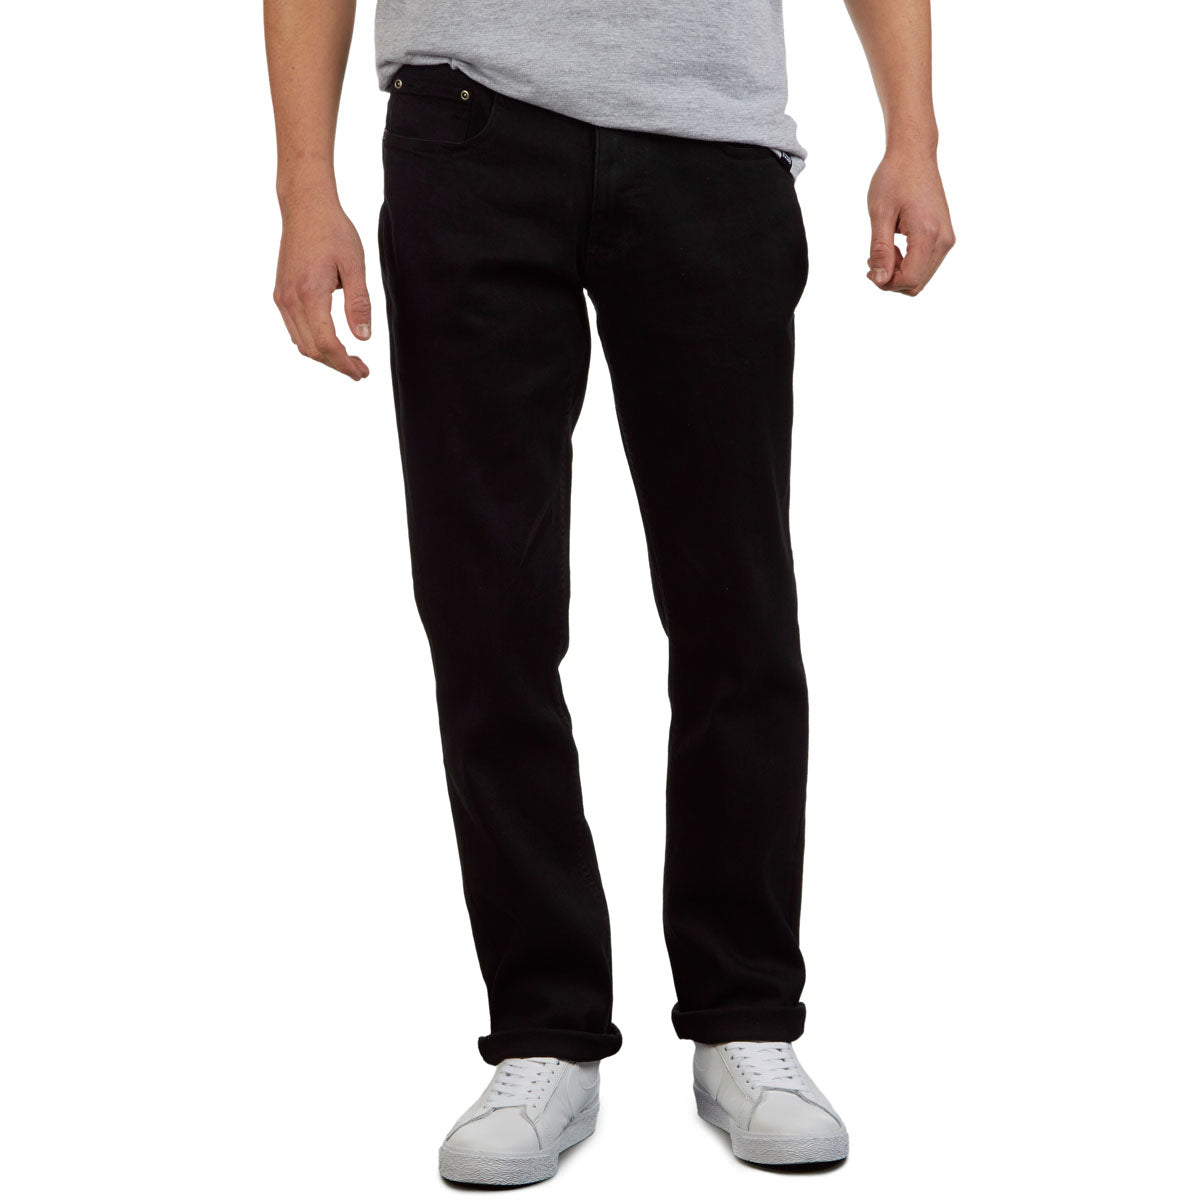 CCS Standard Plus Slim Denim Jeans - Overdyed Black image 4